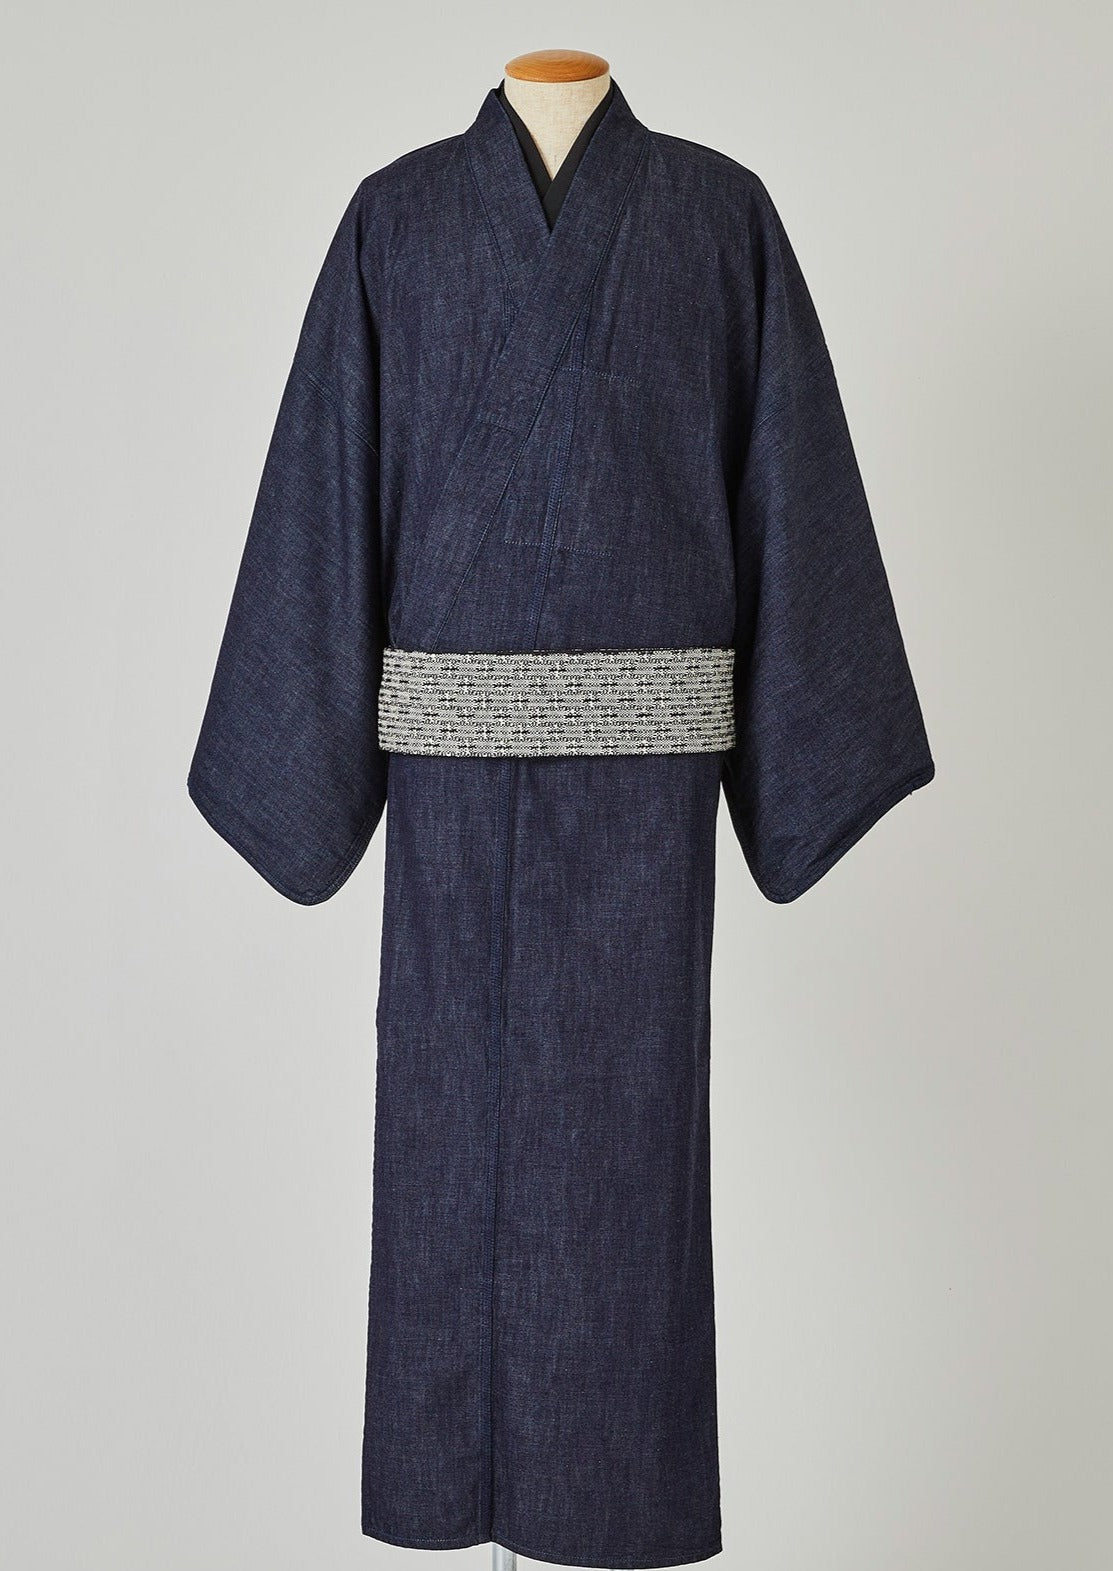 KAPUKI original denim kimono chambray (while stock lasts)